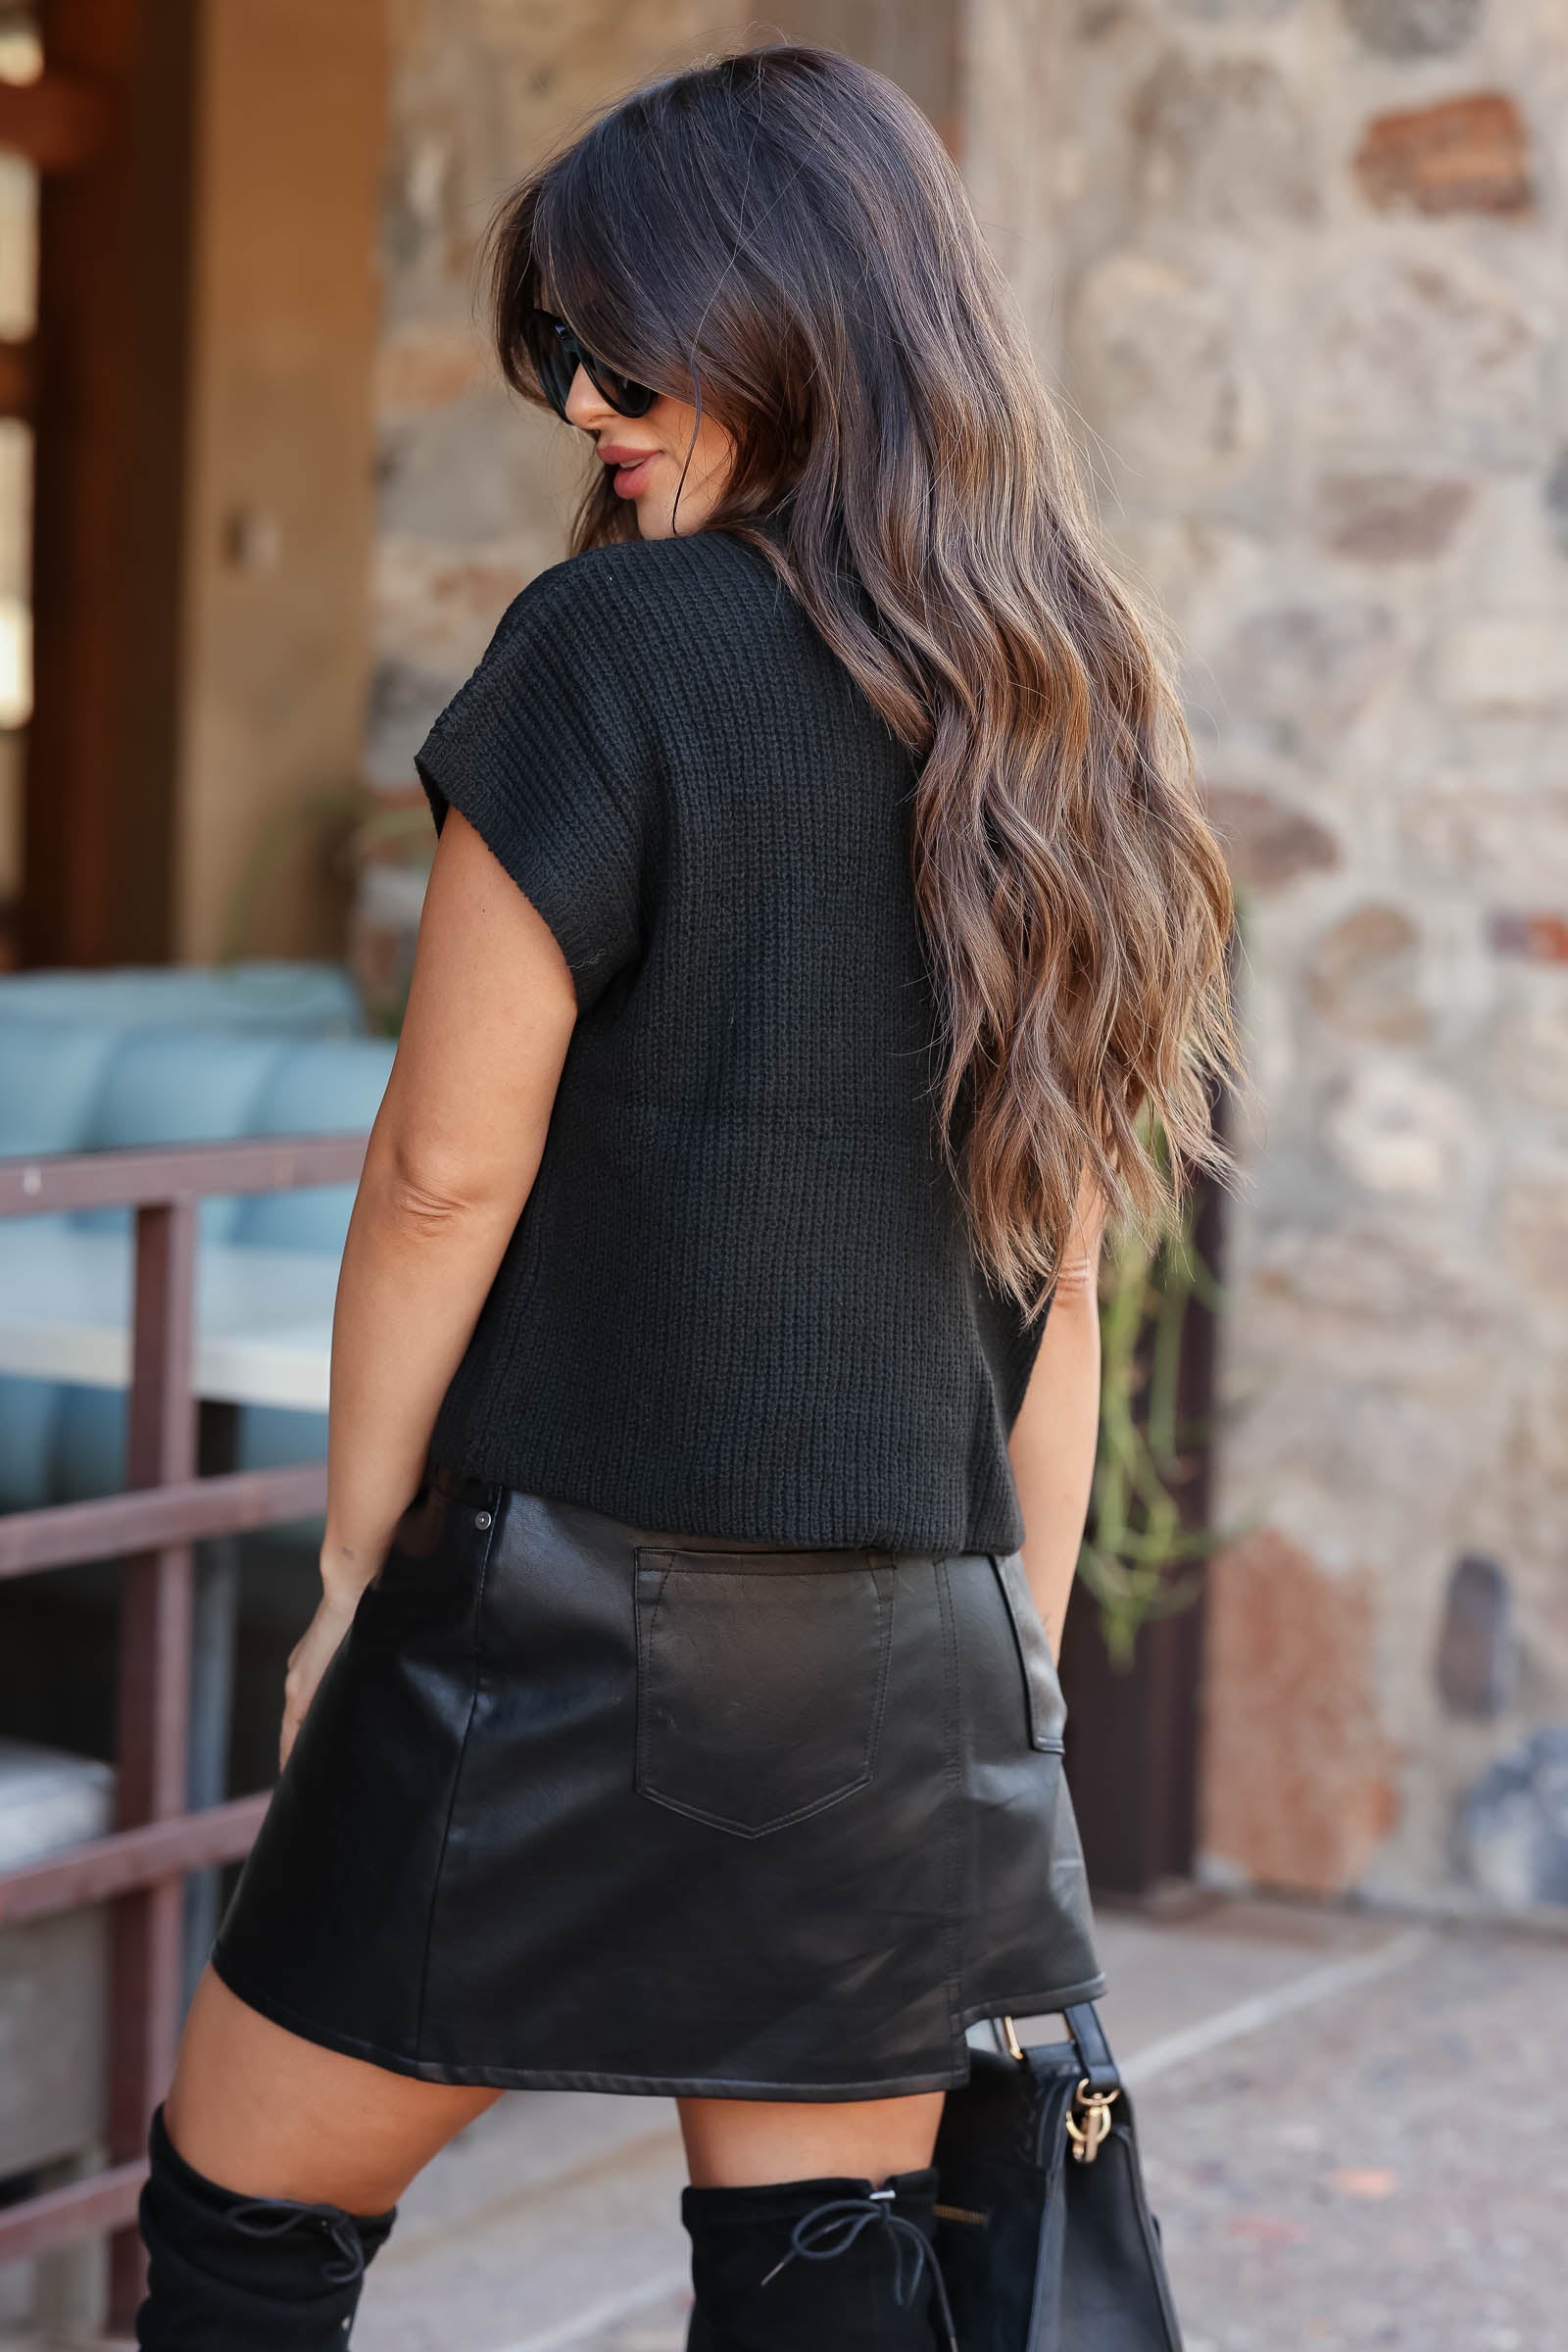 KANCAN Sapphire Vegan Leather Skirt - Black, Closet Candy, 1